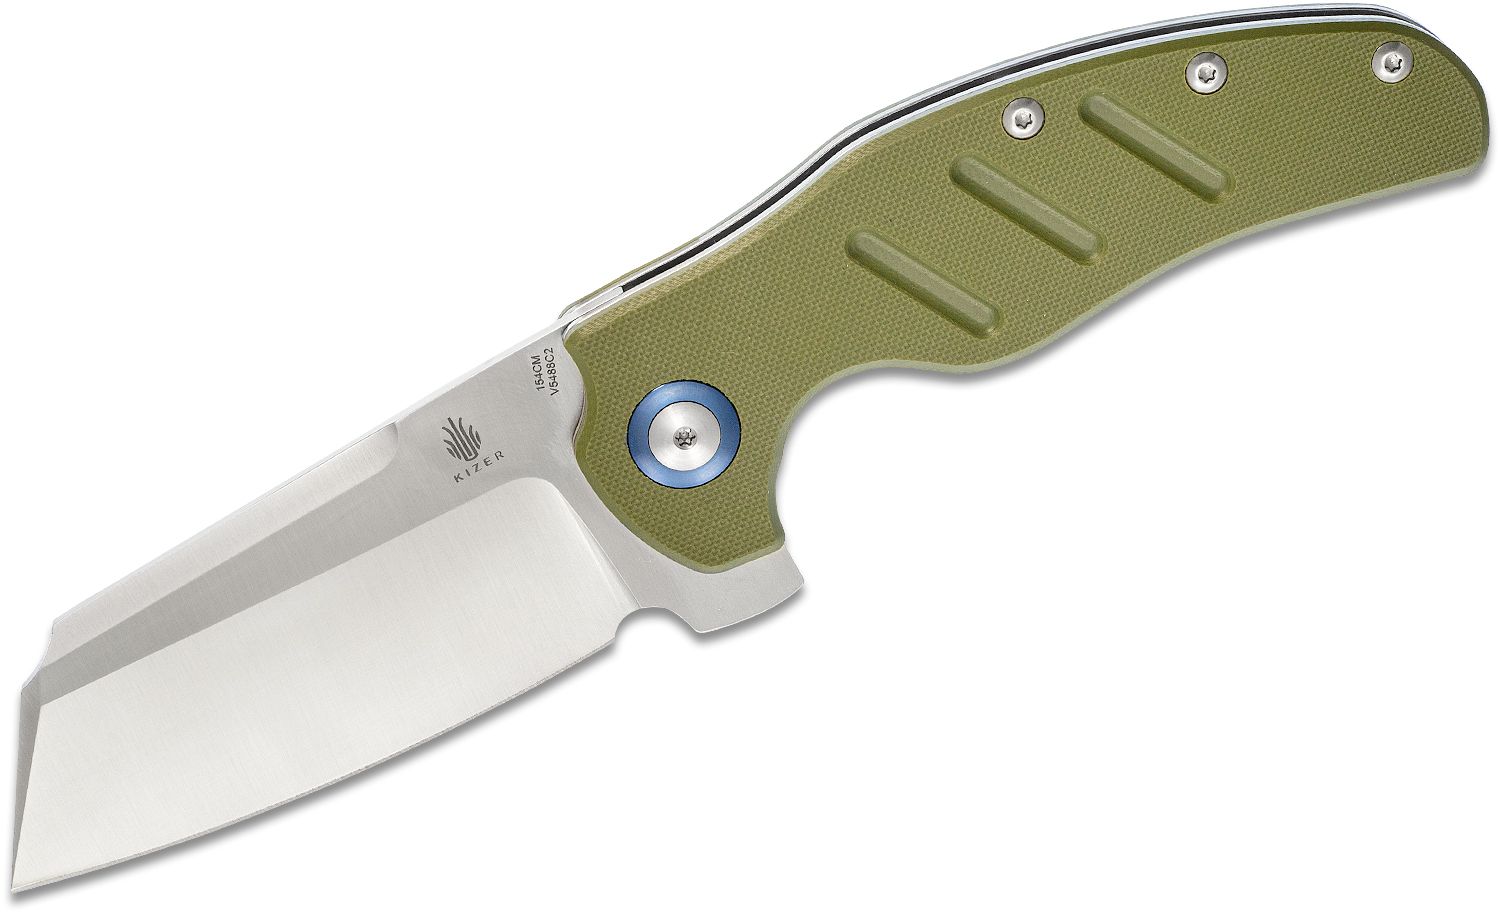 Kizer Cutlery Vanguard Sheepdog XL C01C Flipper Knife 3.9" 154CM Satin Blade, Green G10 Handles - KnifeCenter - V5488C2